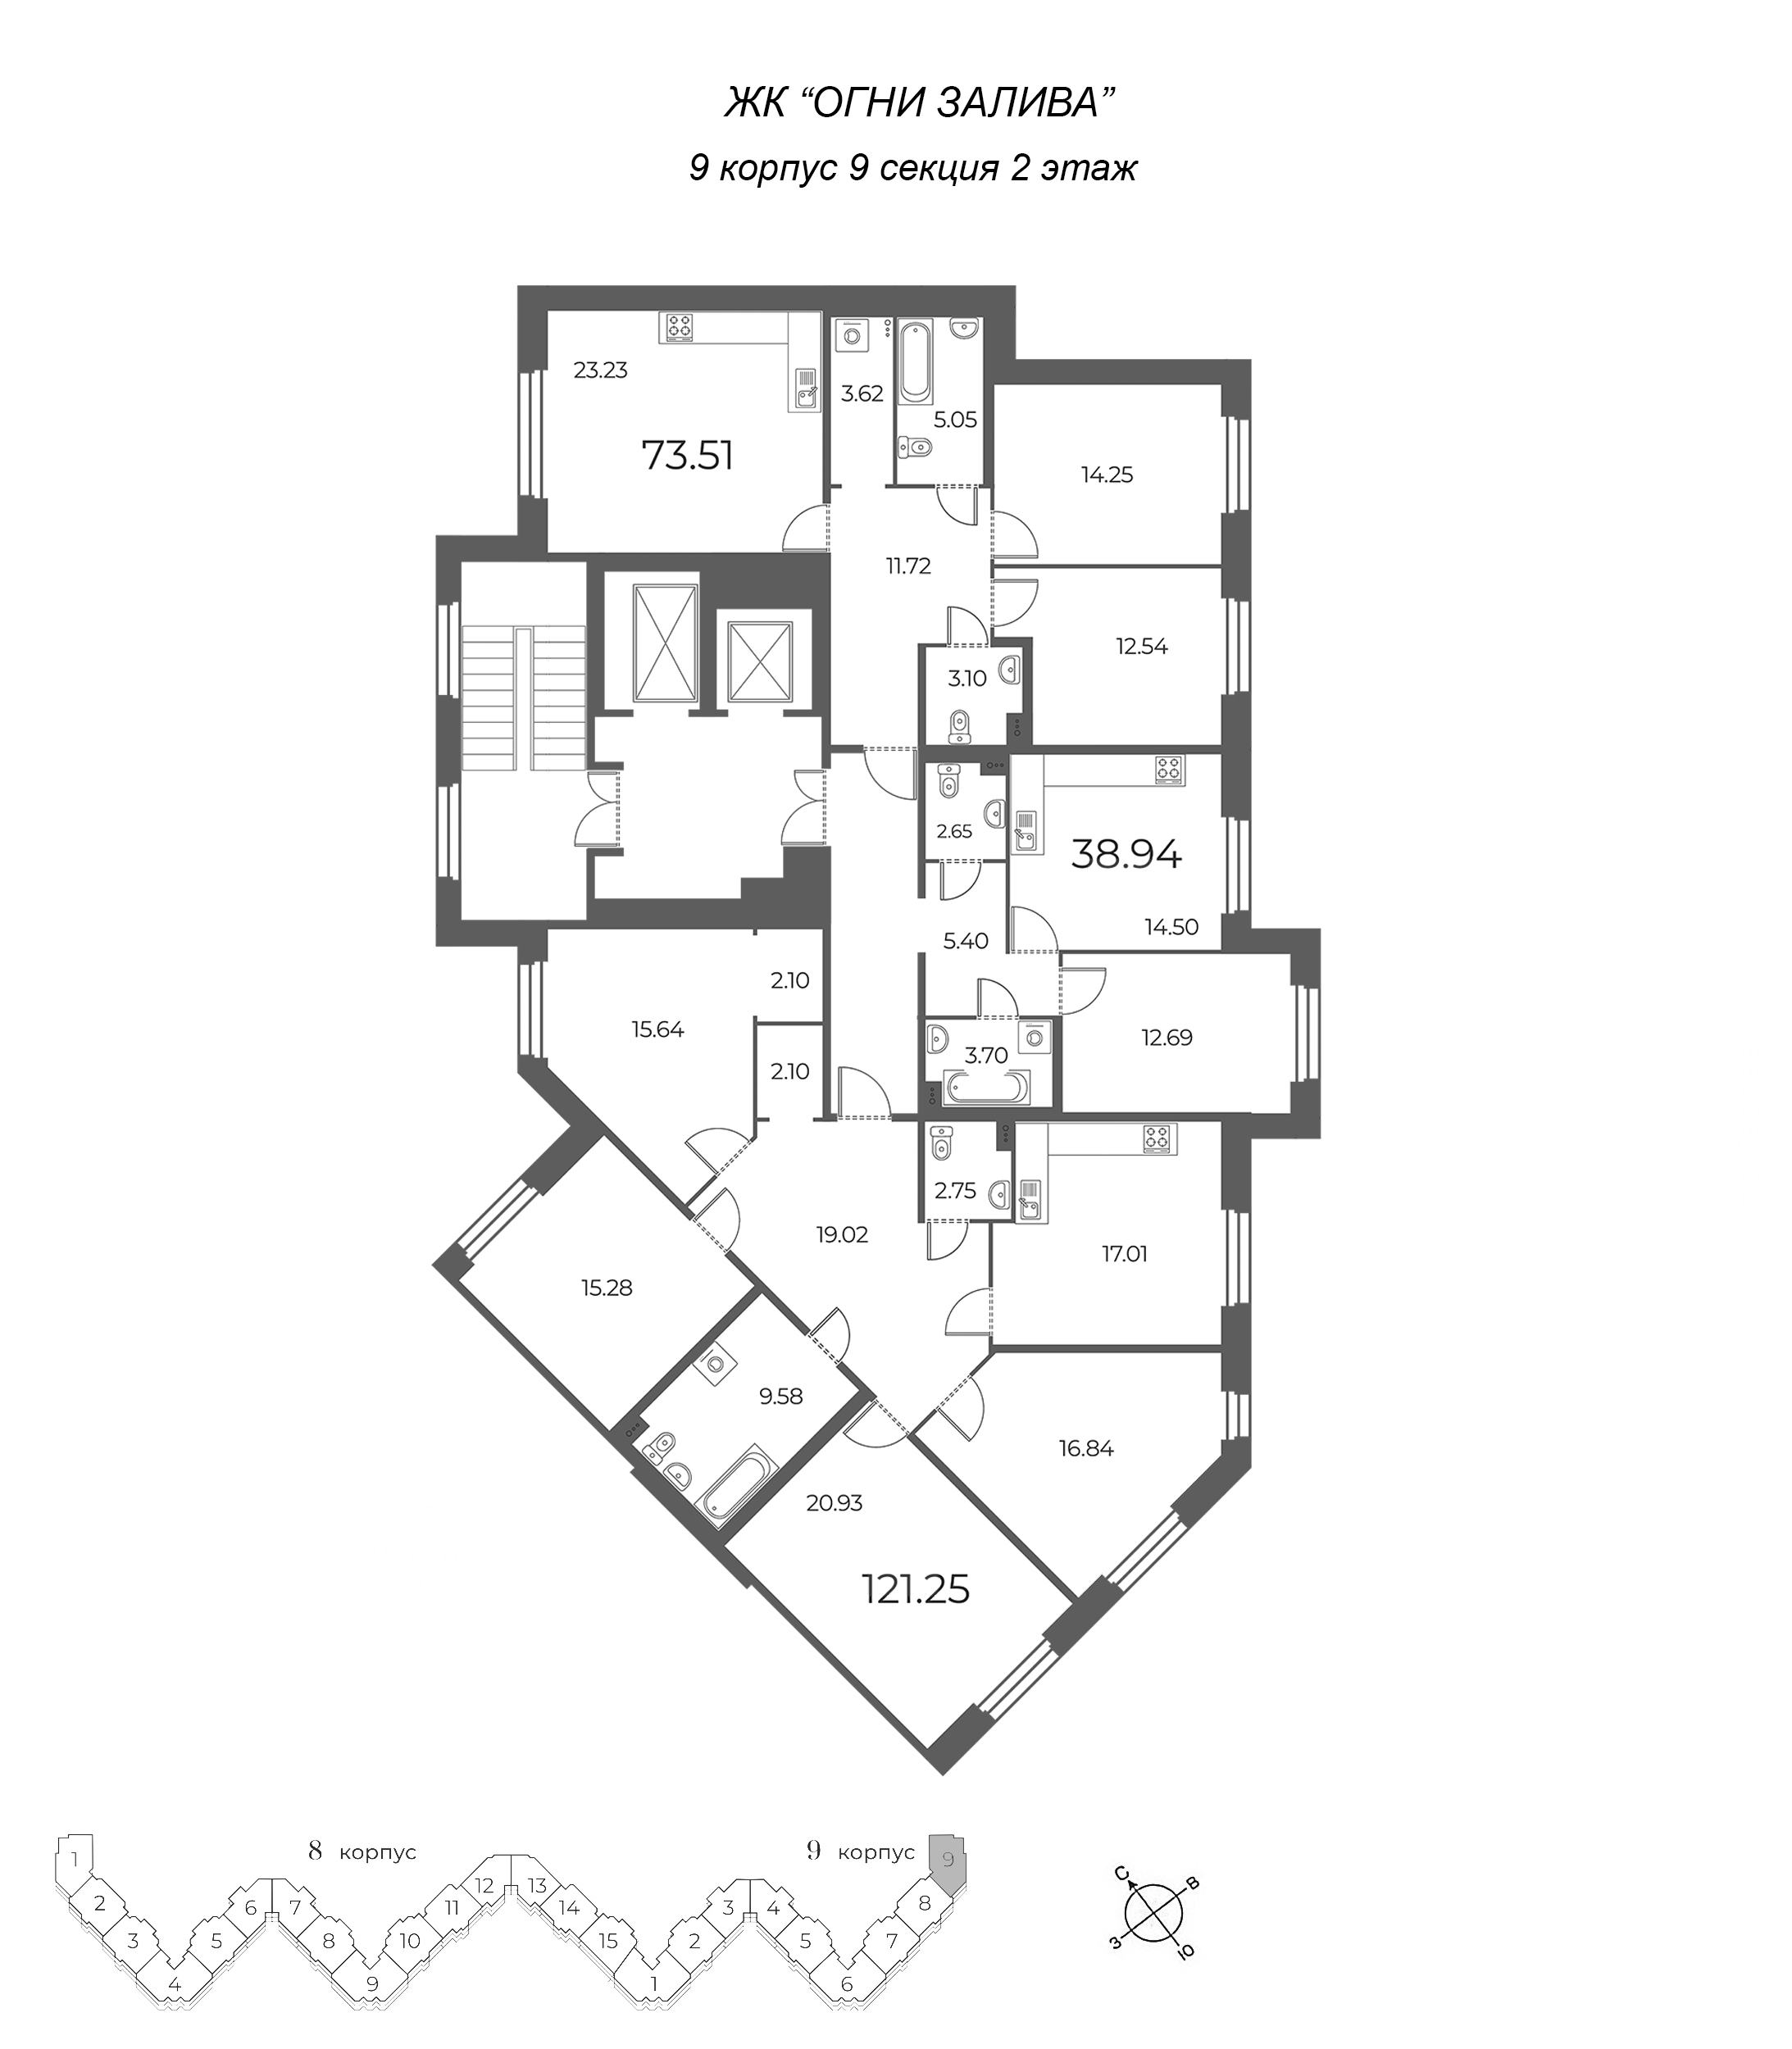 5-комнатная (Евро) квартира, 121.25 м² - планировка этажа